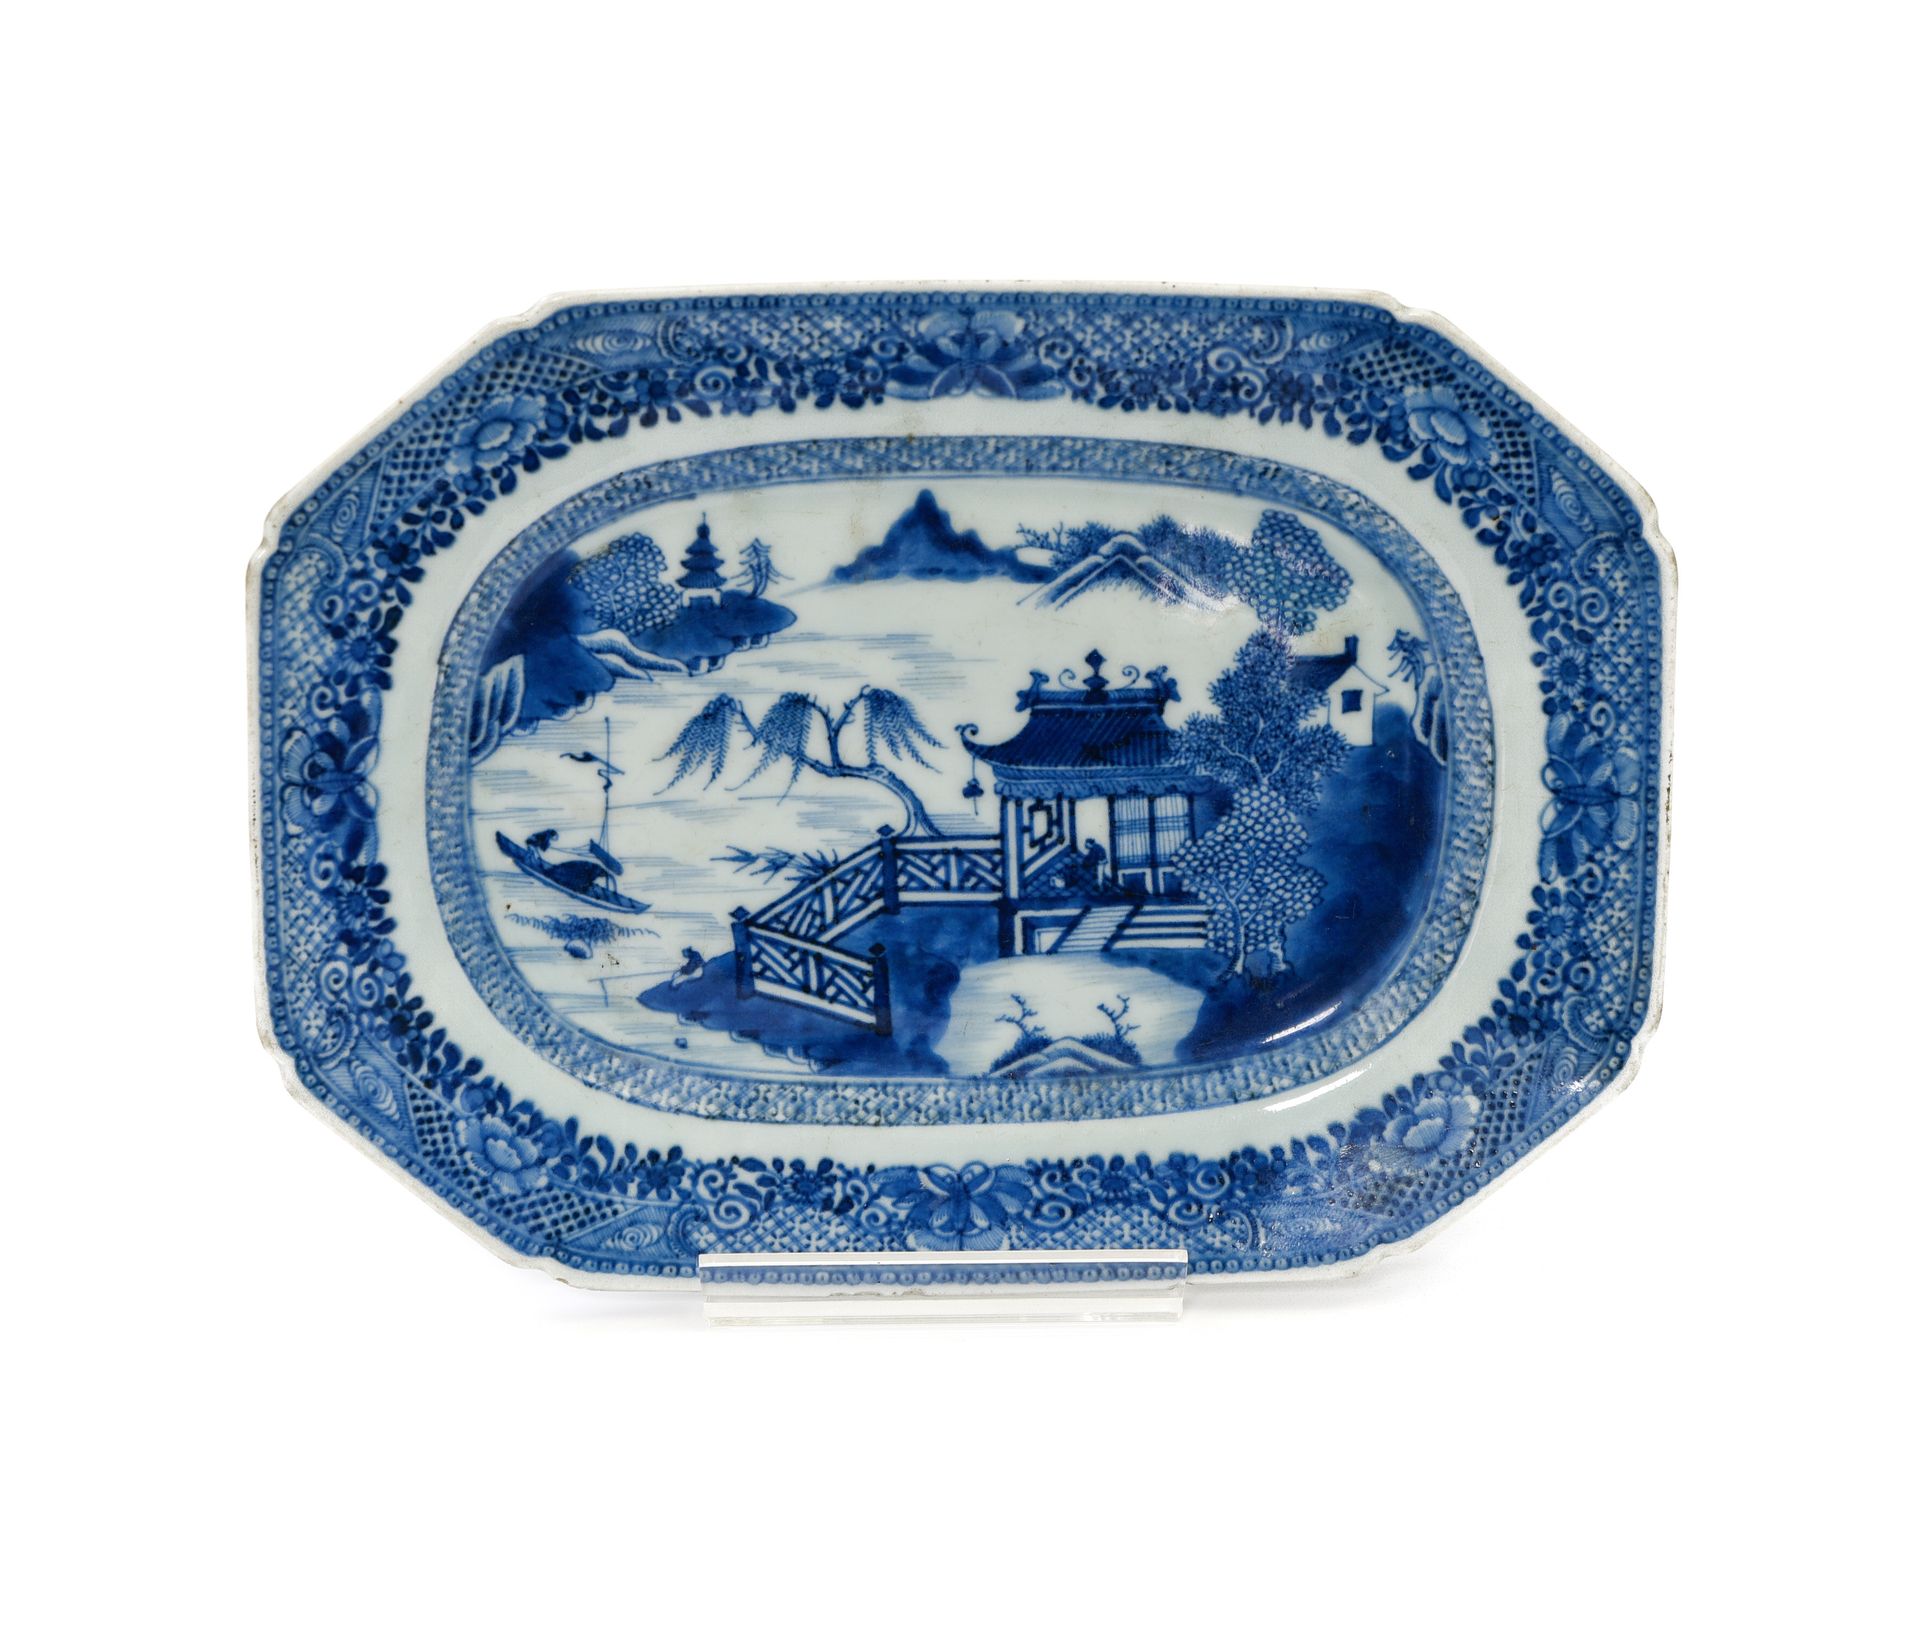 Null 中国，印度公司--乾隆时期（1736-1795）。

长方形展示架，侧面有切口



瓷器以蓝色釉下彩装饰，中央为湖泊景观，两翼饰以花卉和十字架。

&hellip;